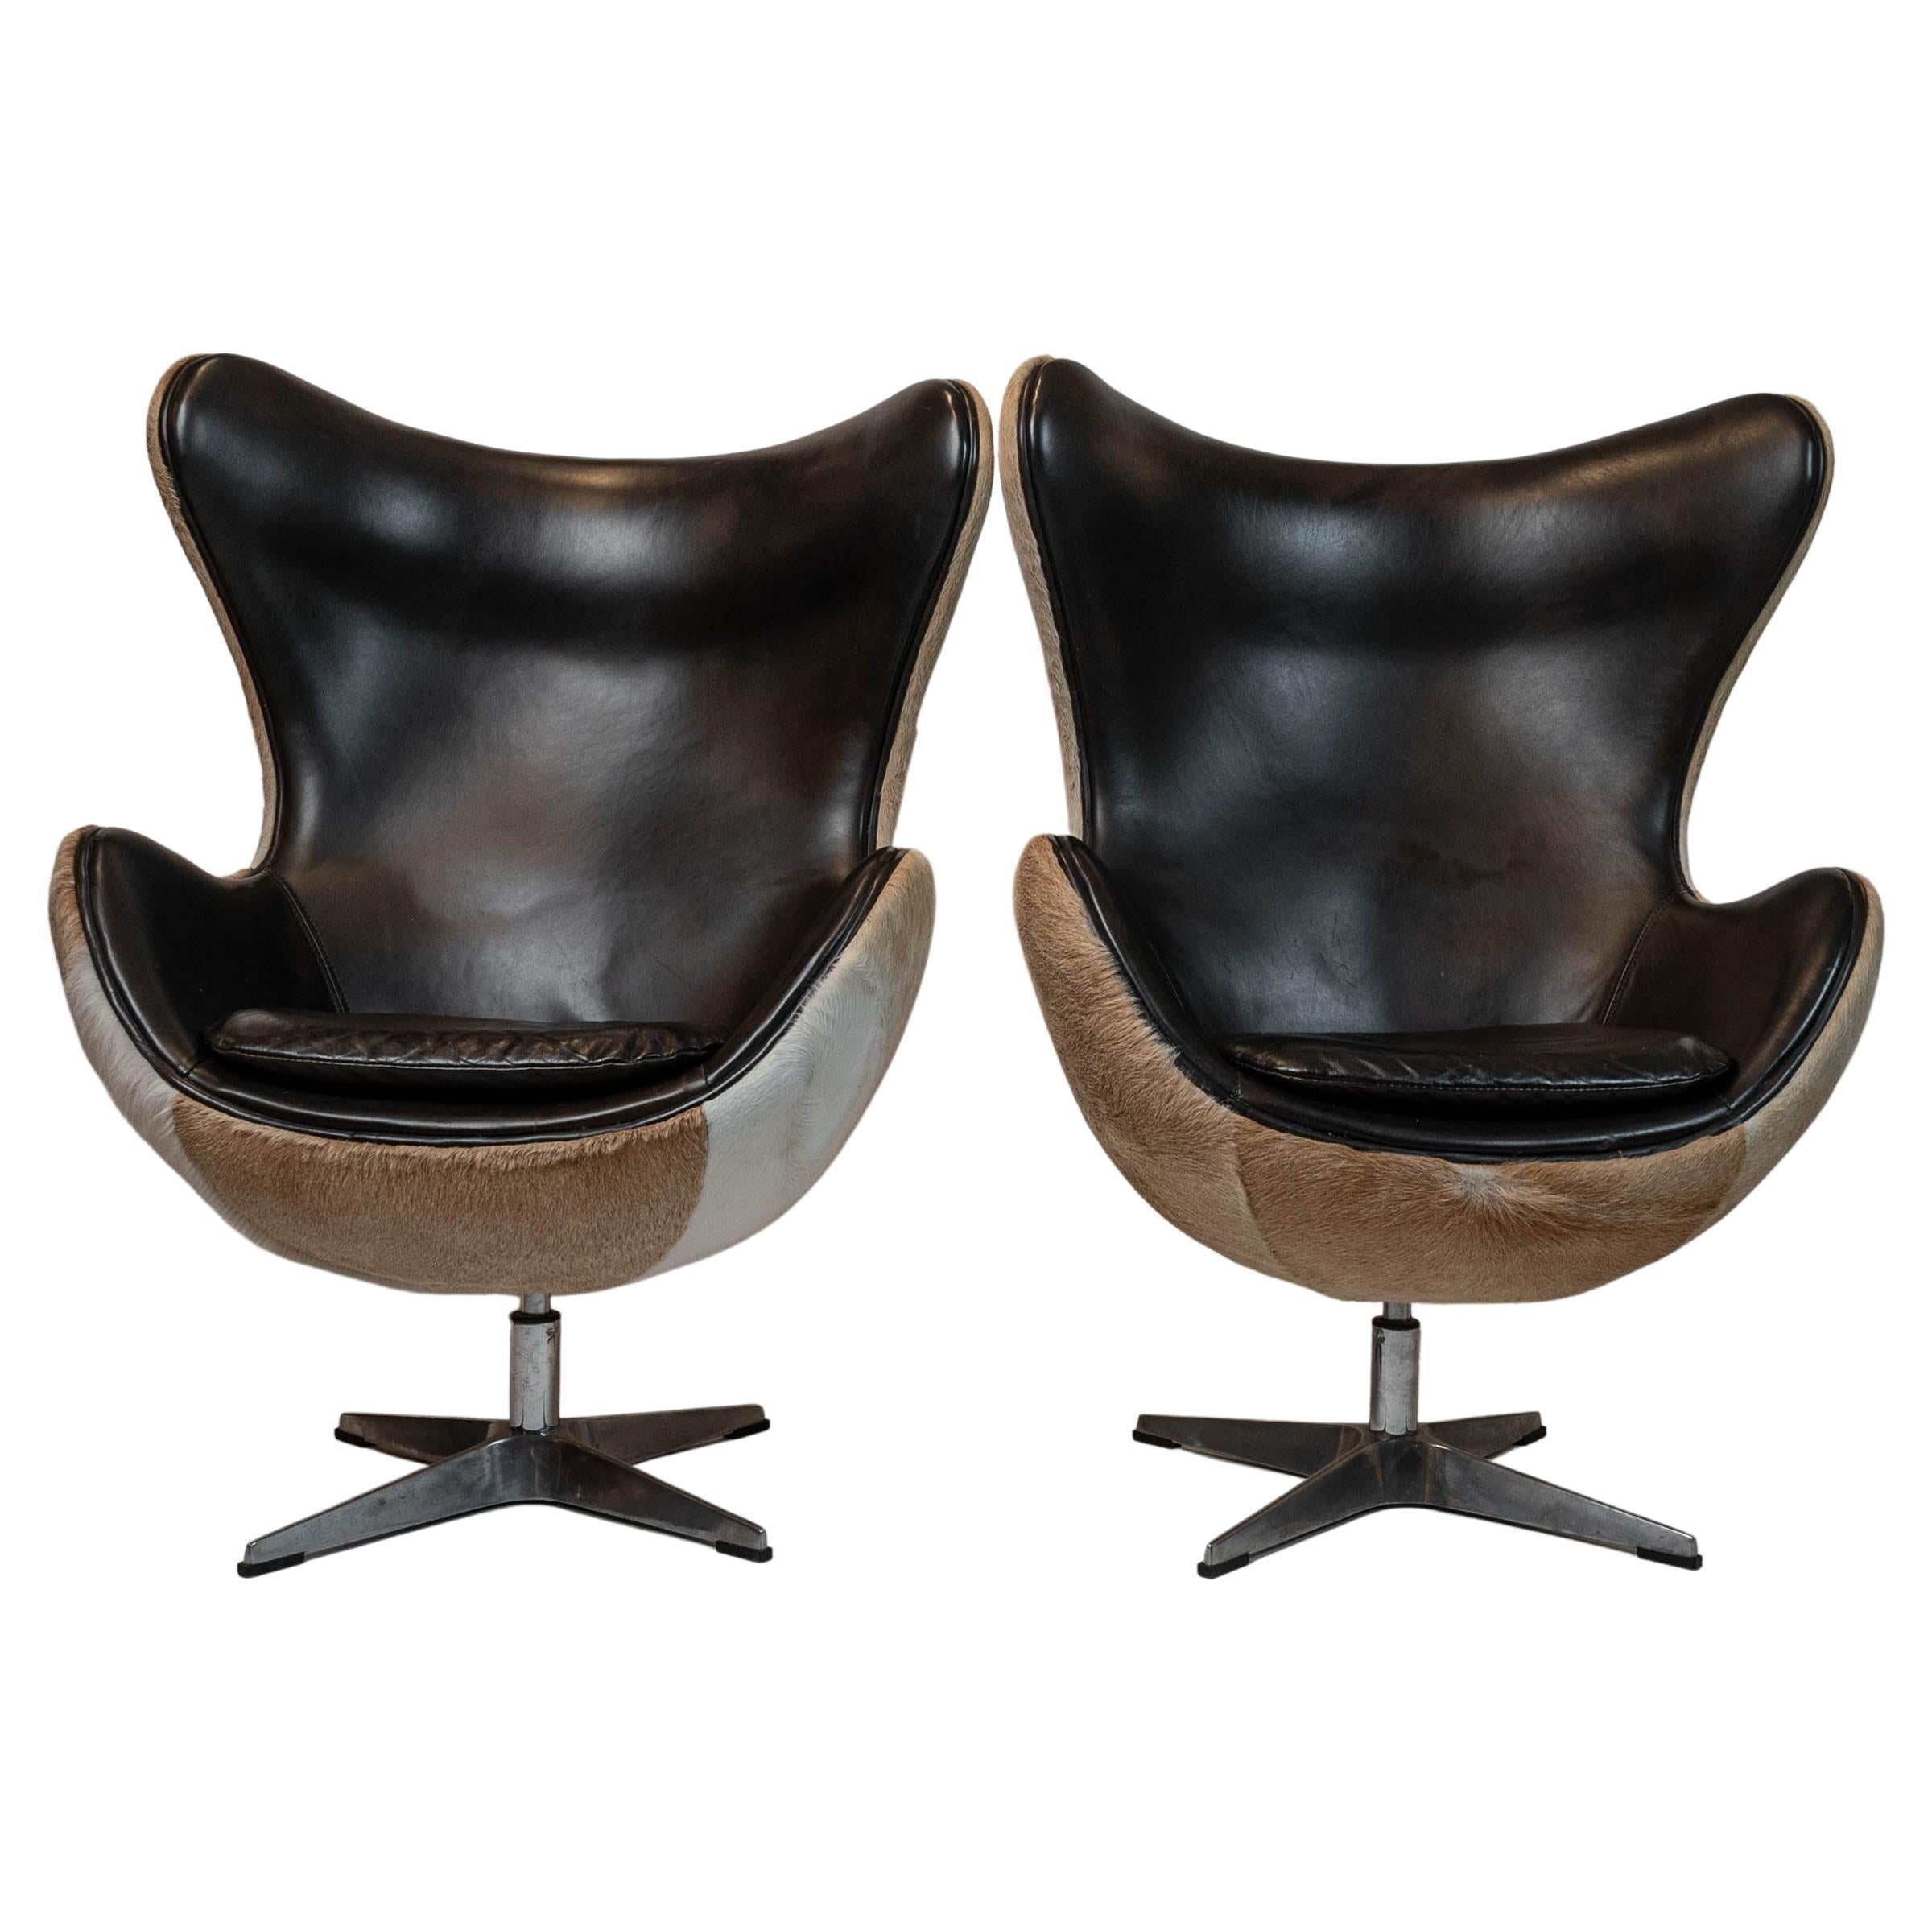 Sensational Pair of Hair on Hide & Leather Arne Jacobsen Inspired Egg Chairs